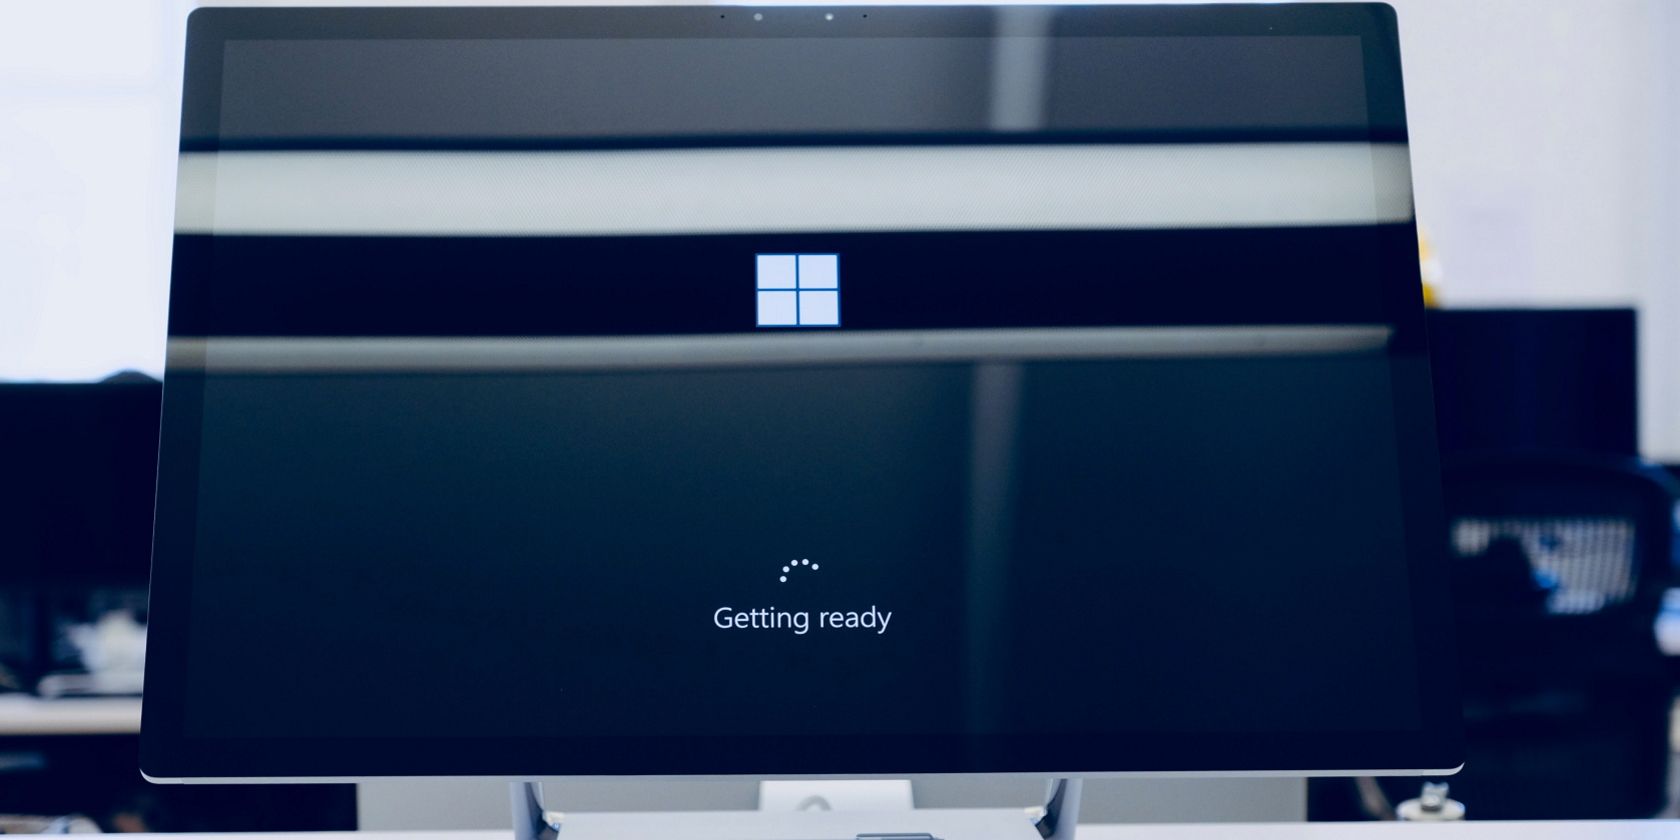 Windows 10 & 11 cover image